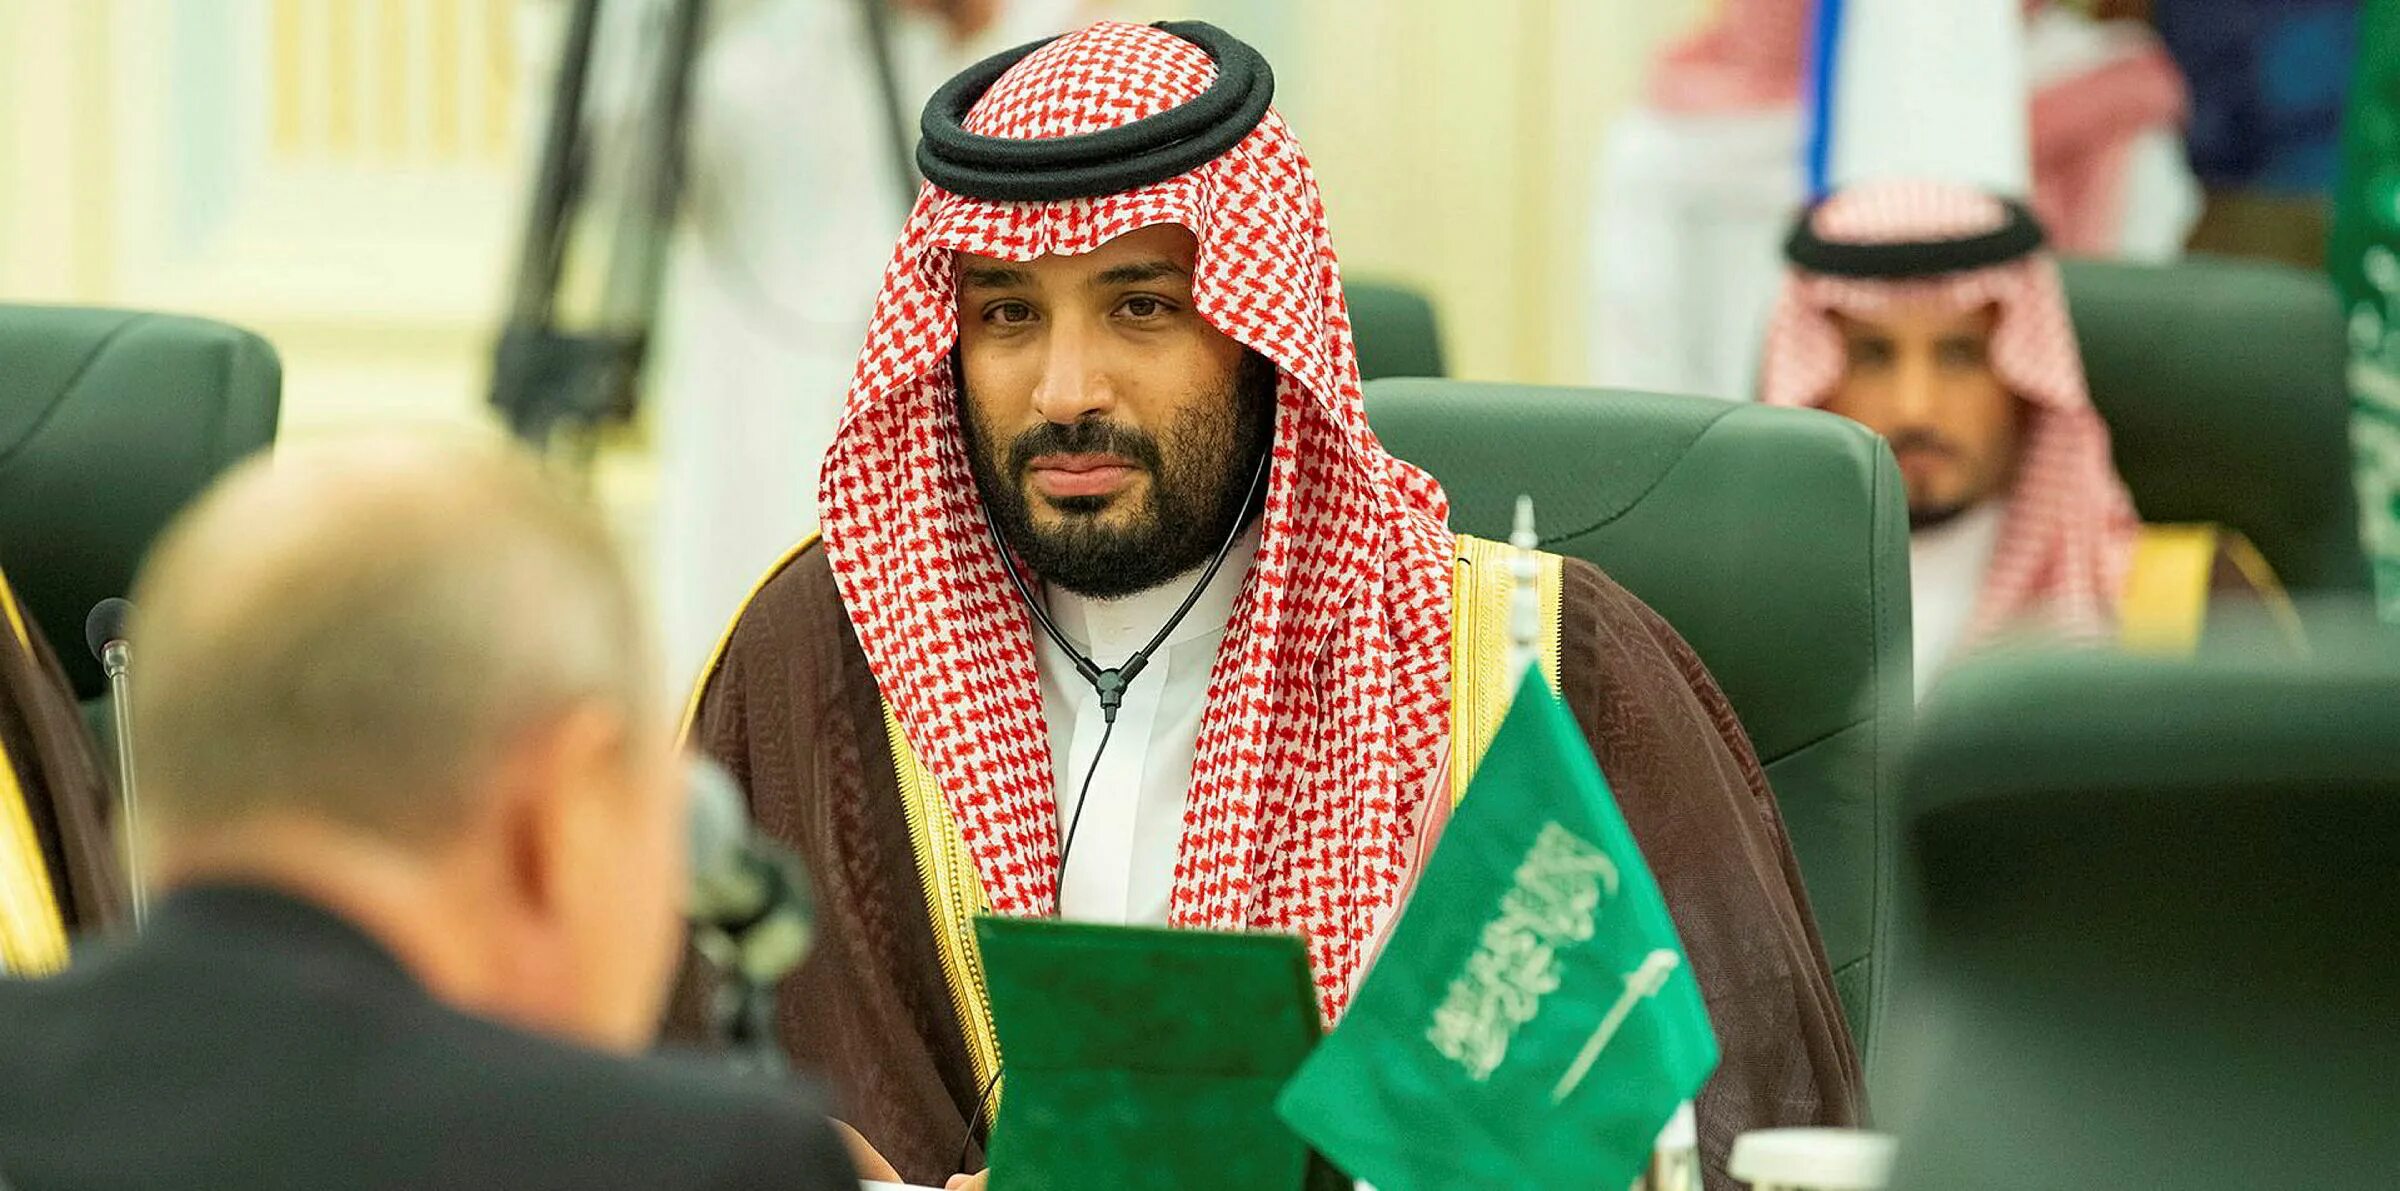 Мухаммед ибн Салман Аль Сауд. Саудовский принц Мухаммед Бен Салман. Наследный принц Мухаммед Бин Салман. Принц Саудовской Аравии Мухаммед.